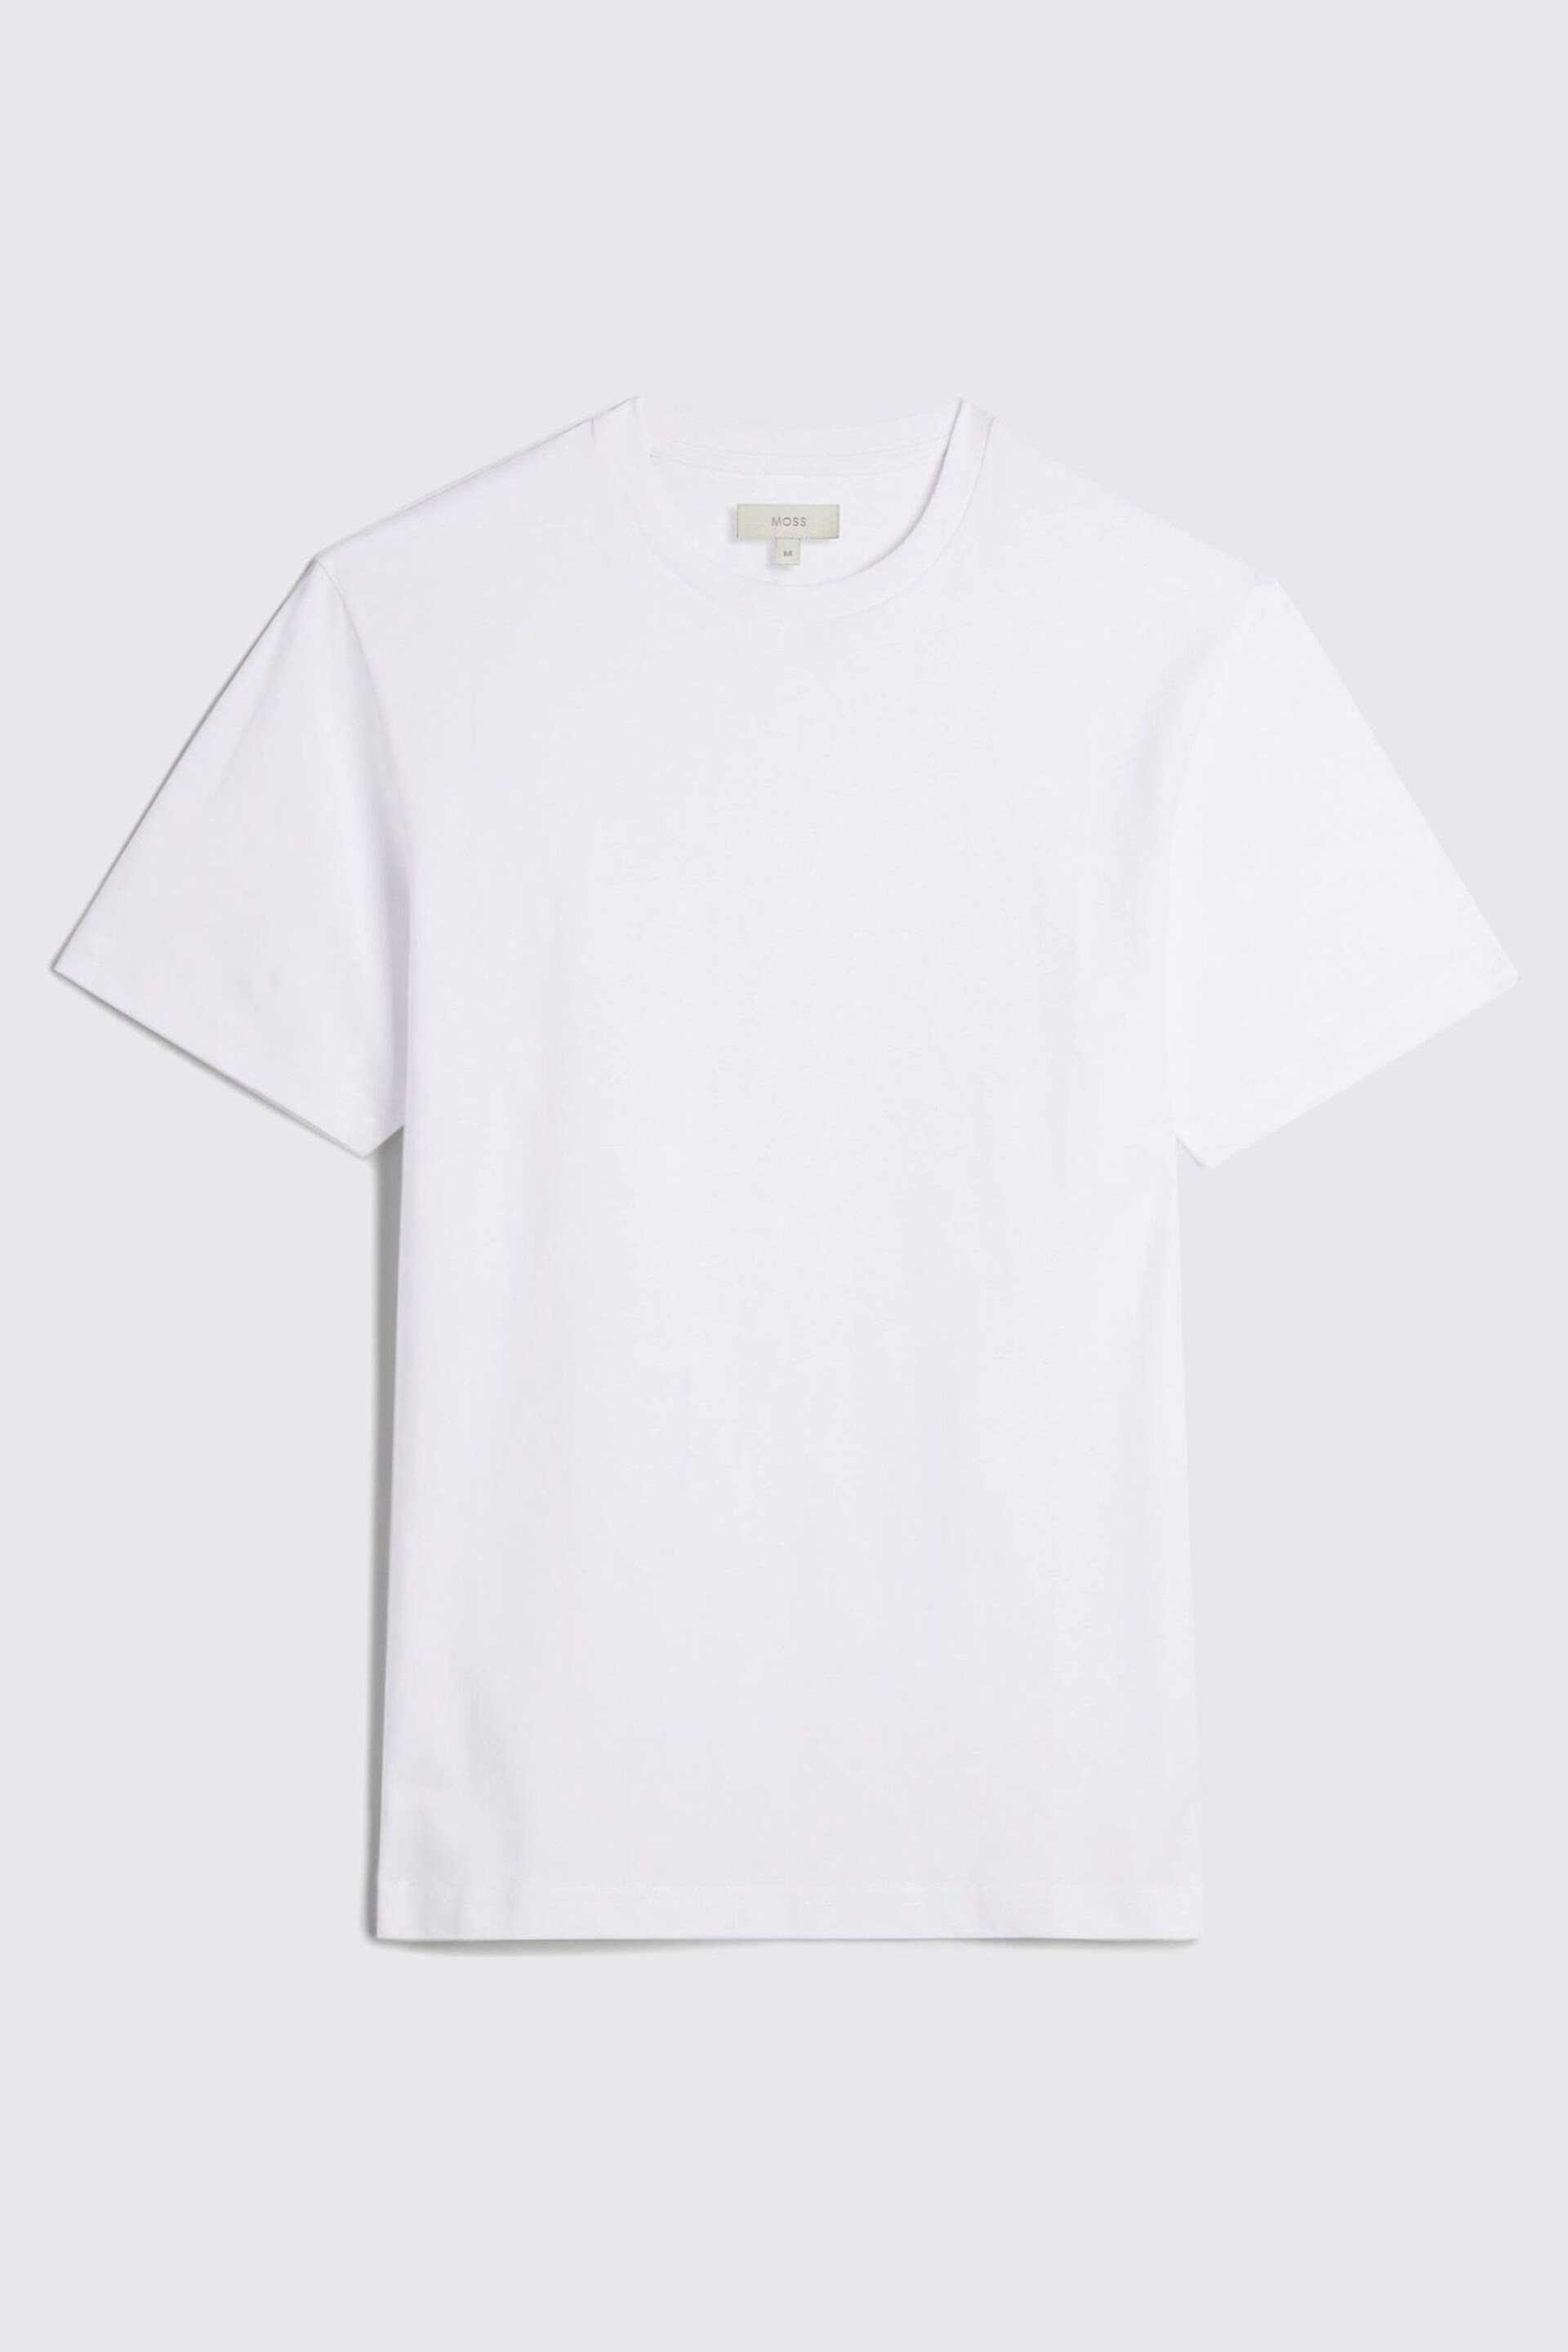 MOSS White Crew Neck T-Shirt - Image 4 of 4